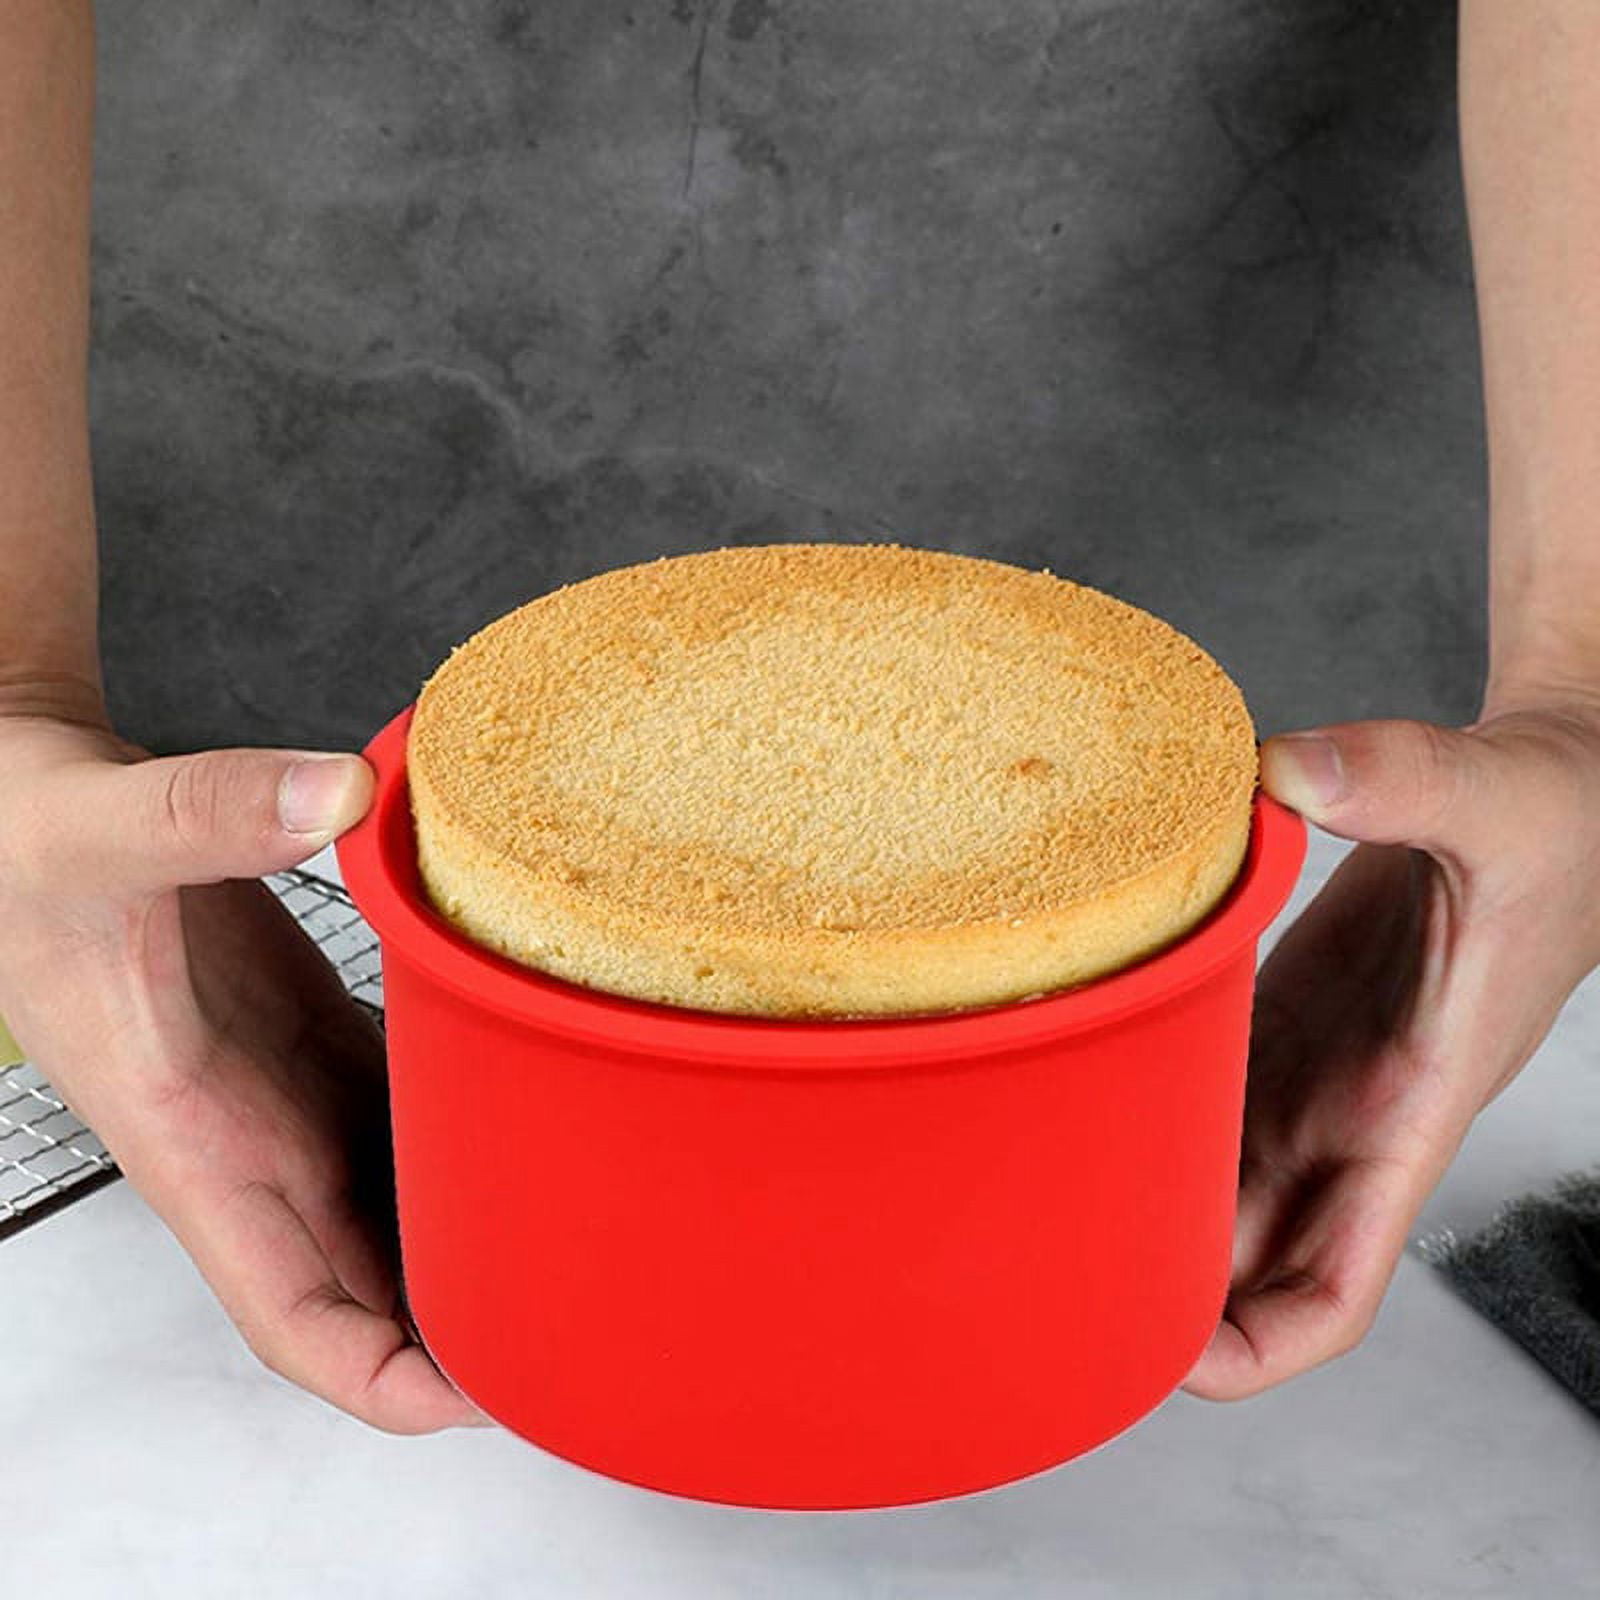 Staruby Silicone Mini Cake Molds 4 Inch Round Baking Brazil